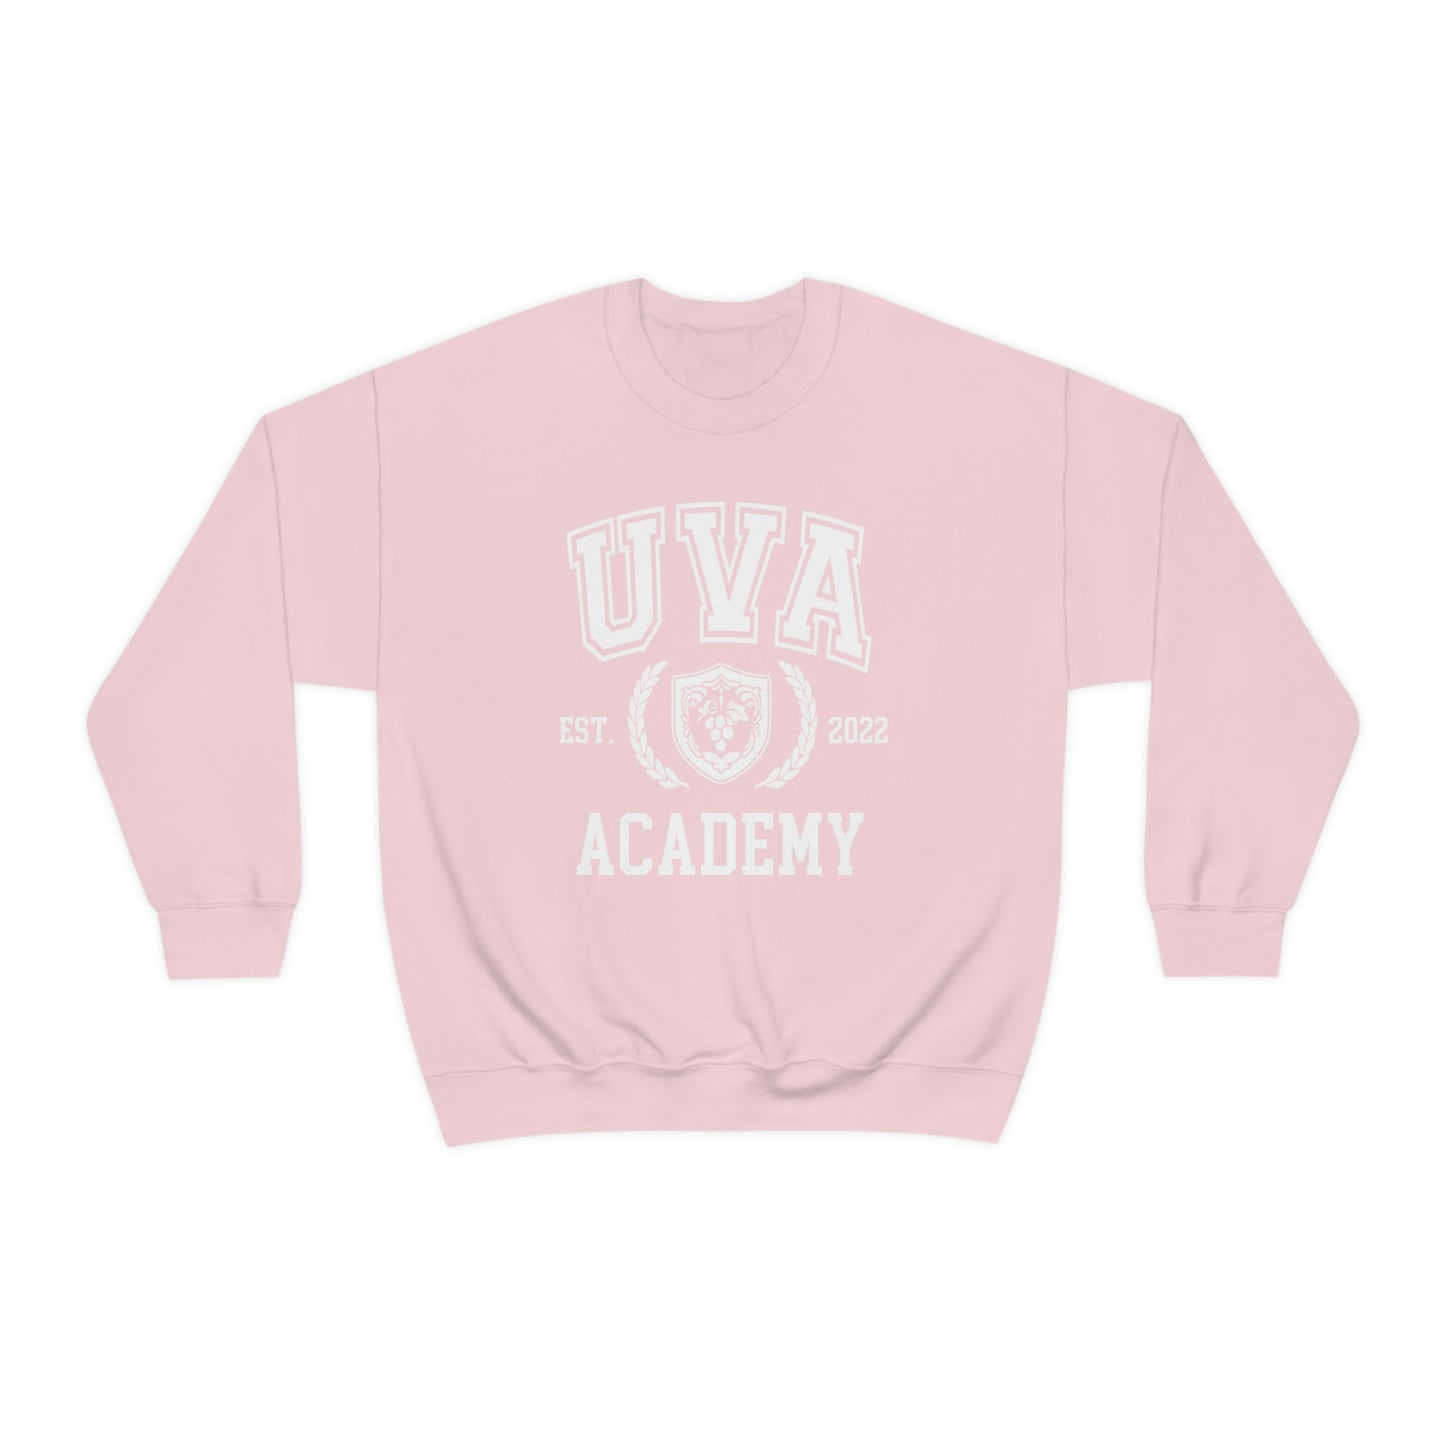 UVAs Academy sweatshirt College Crewneck Regions crew neck